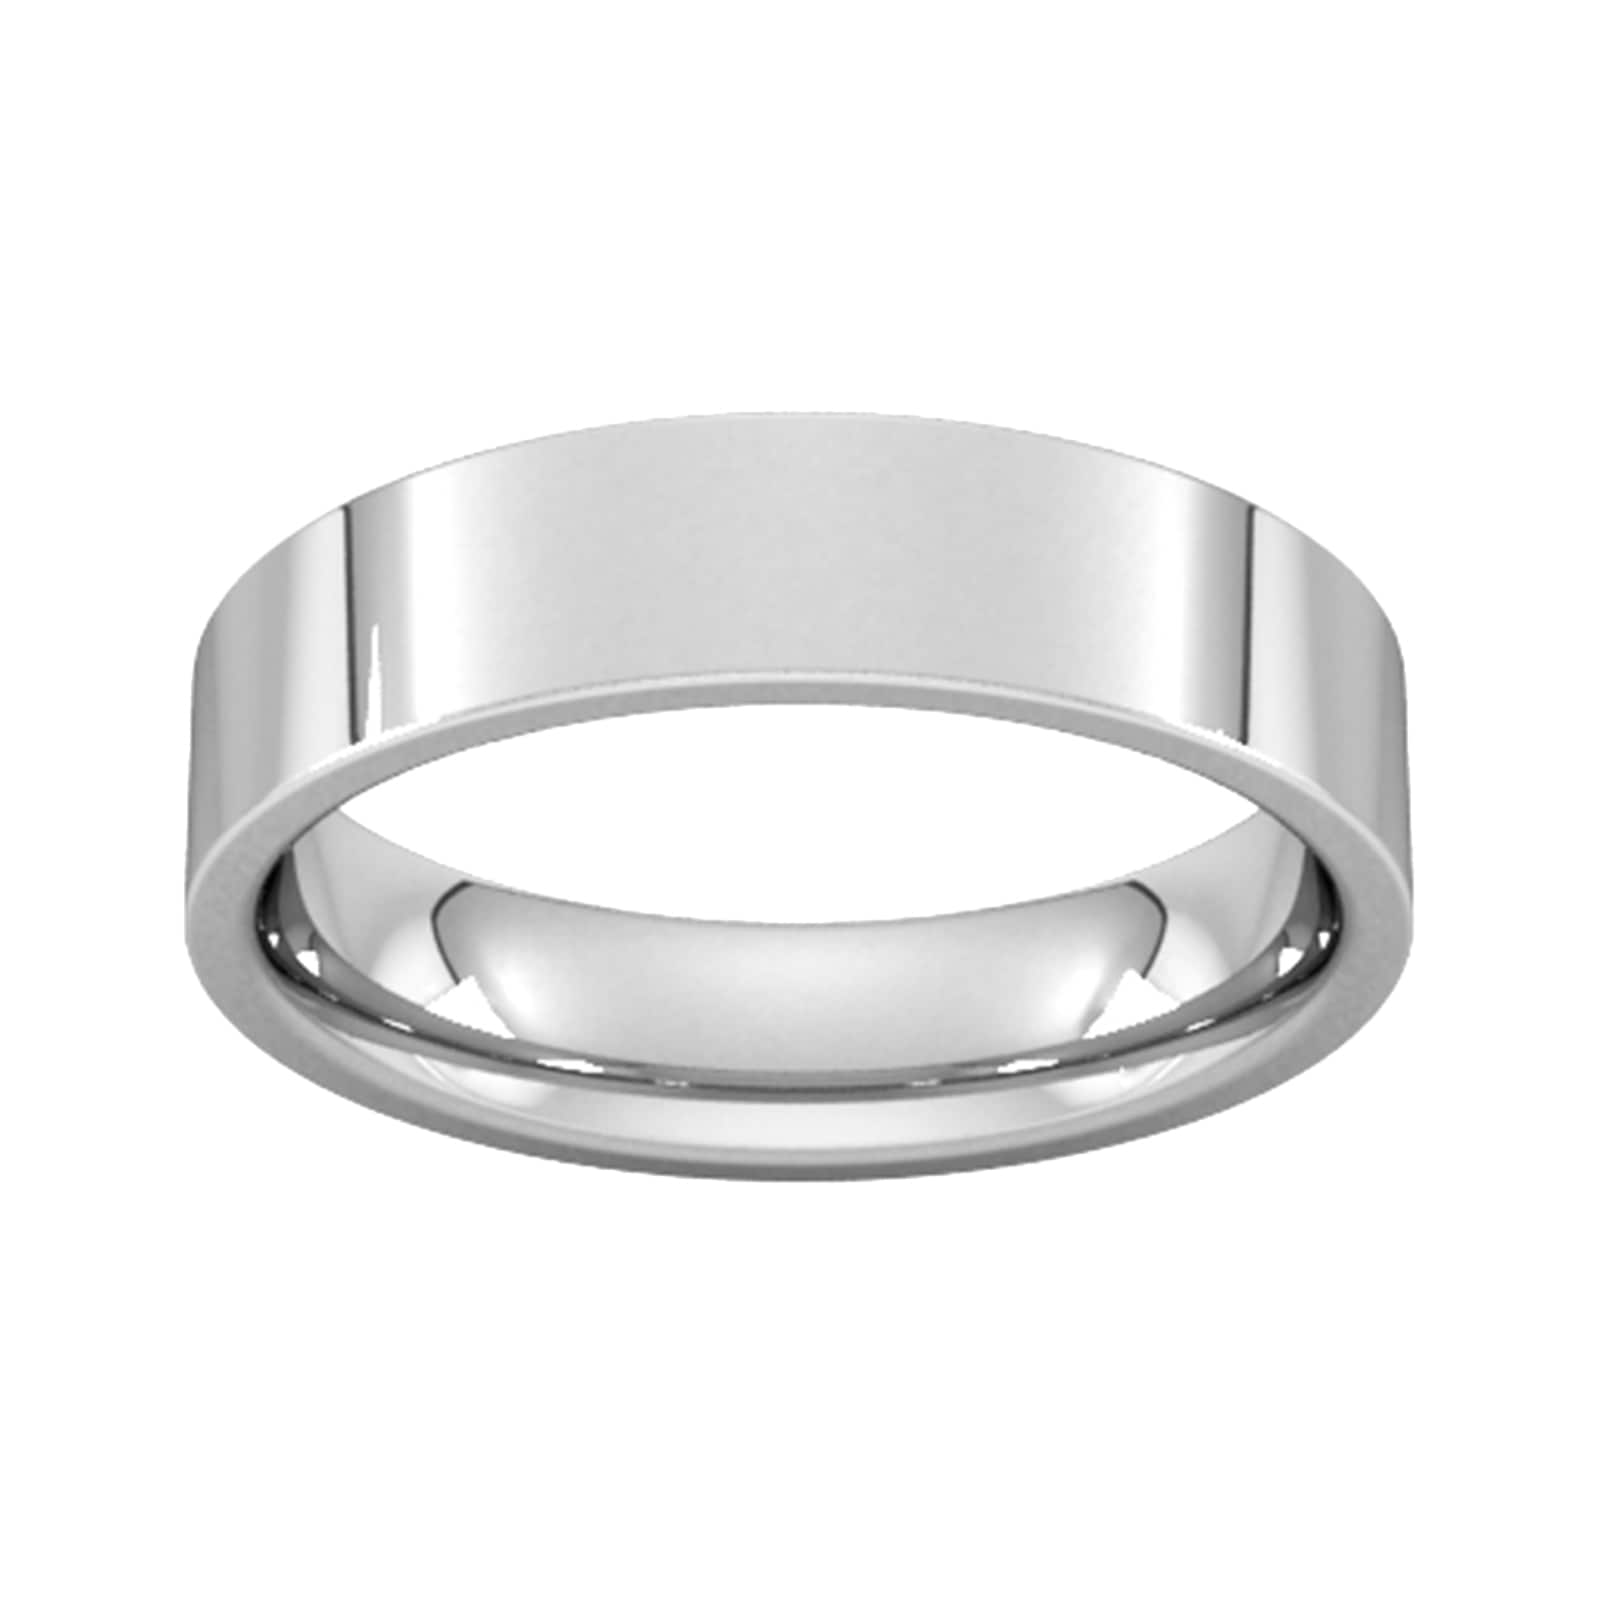 5mm Flat Court Heavy Wedding Ring In 950 Palladium - Ring Size Q